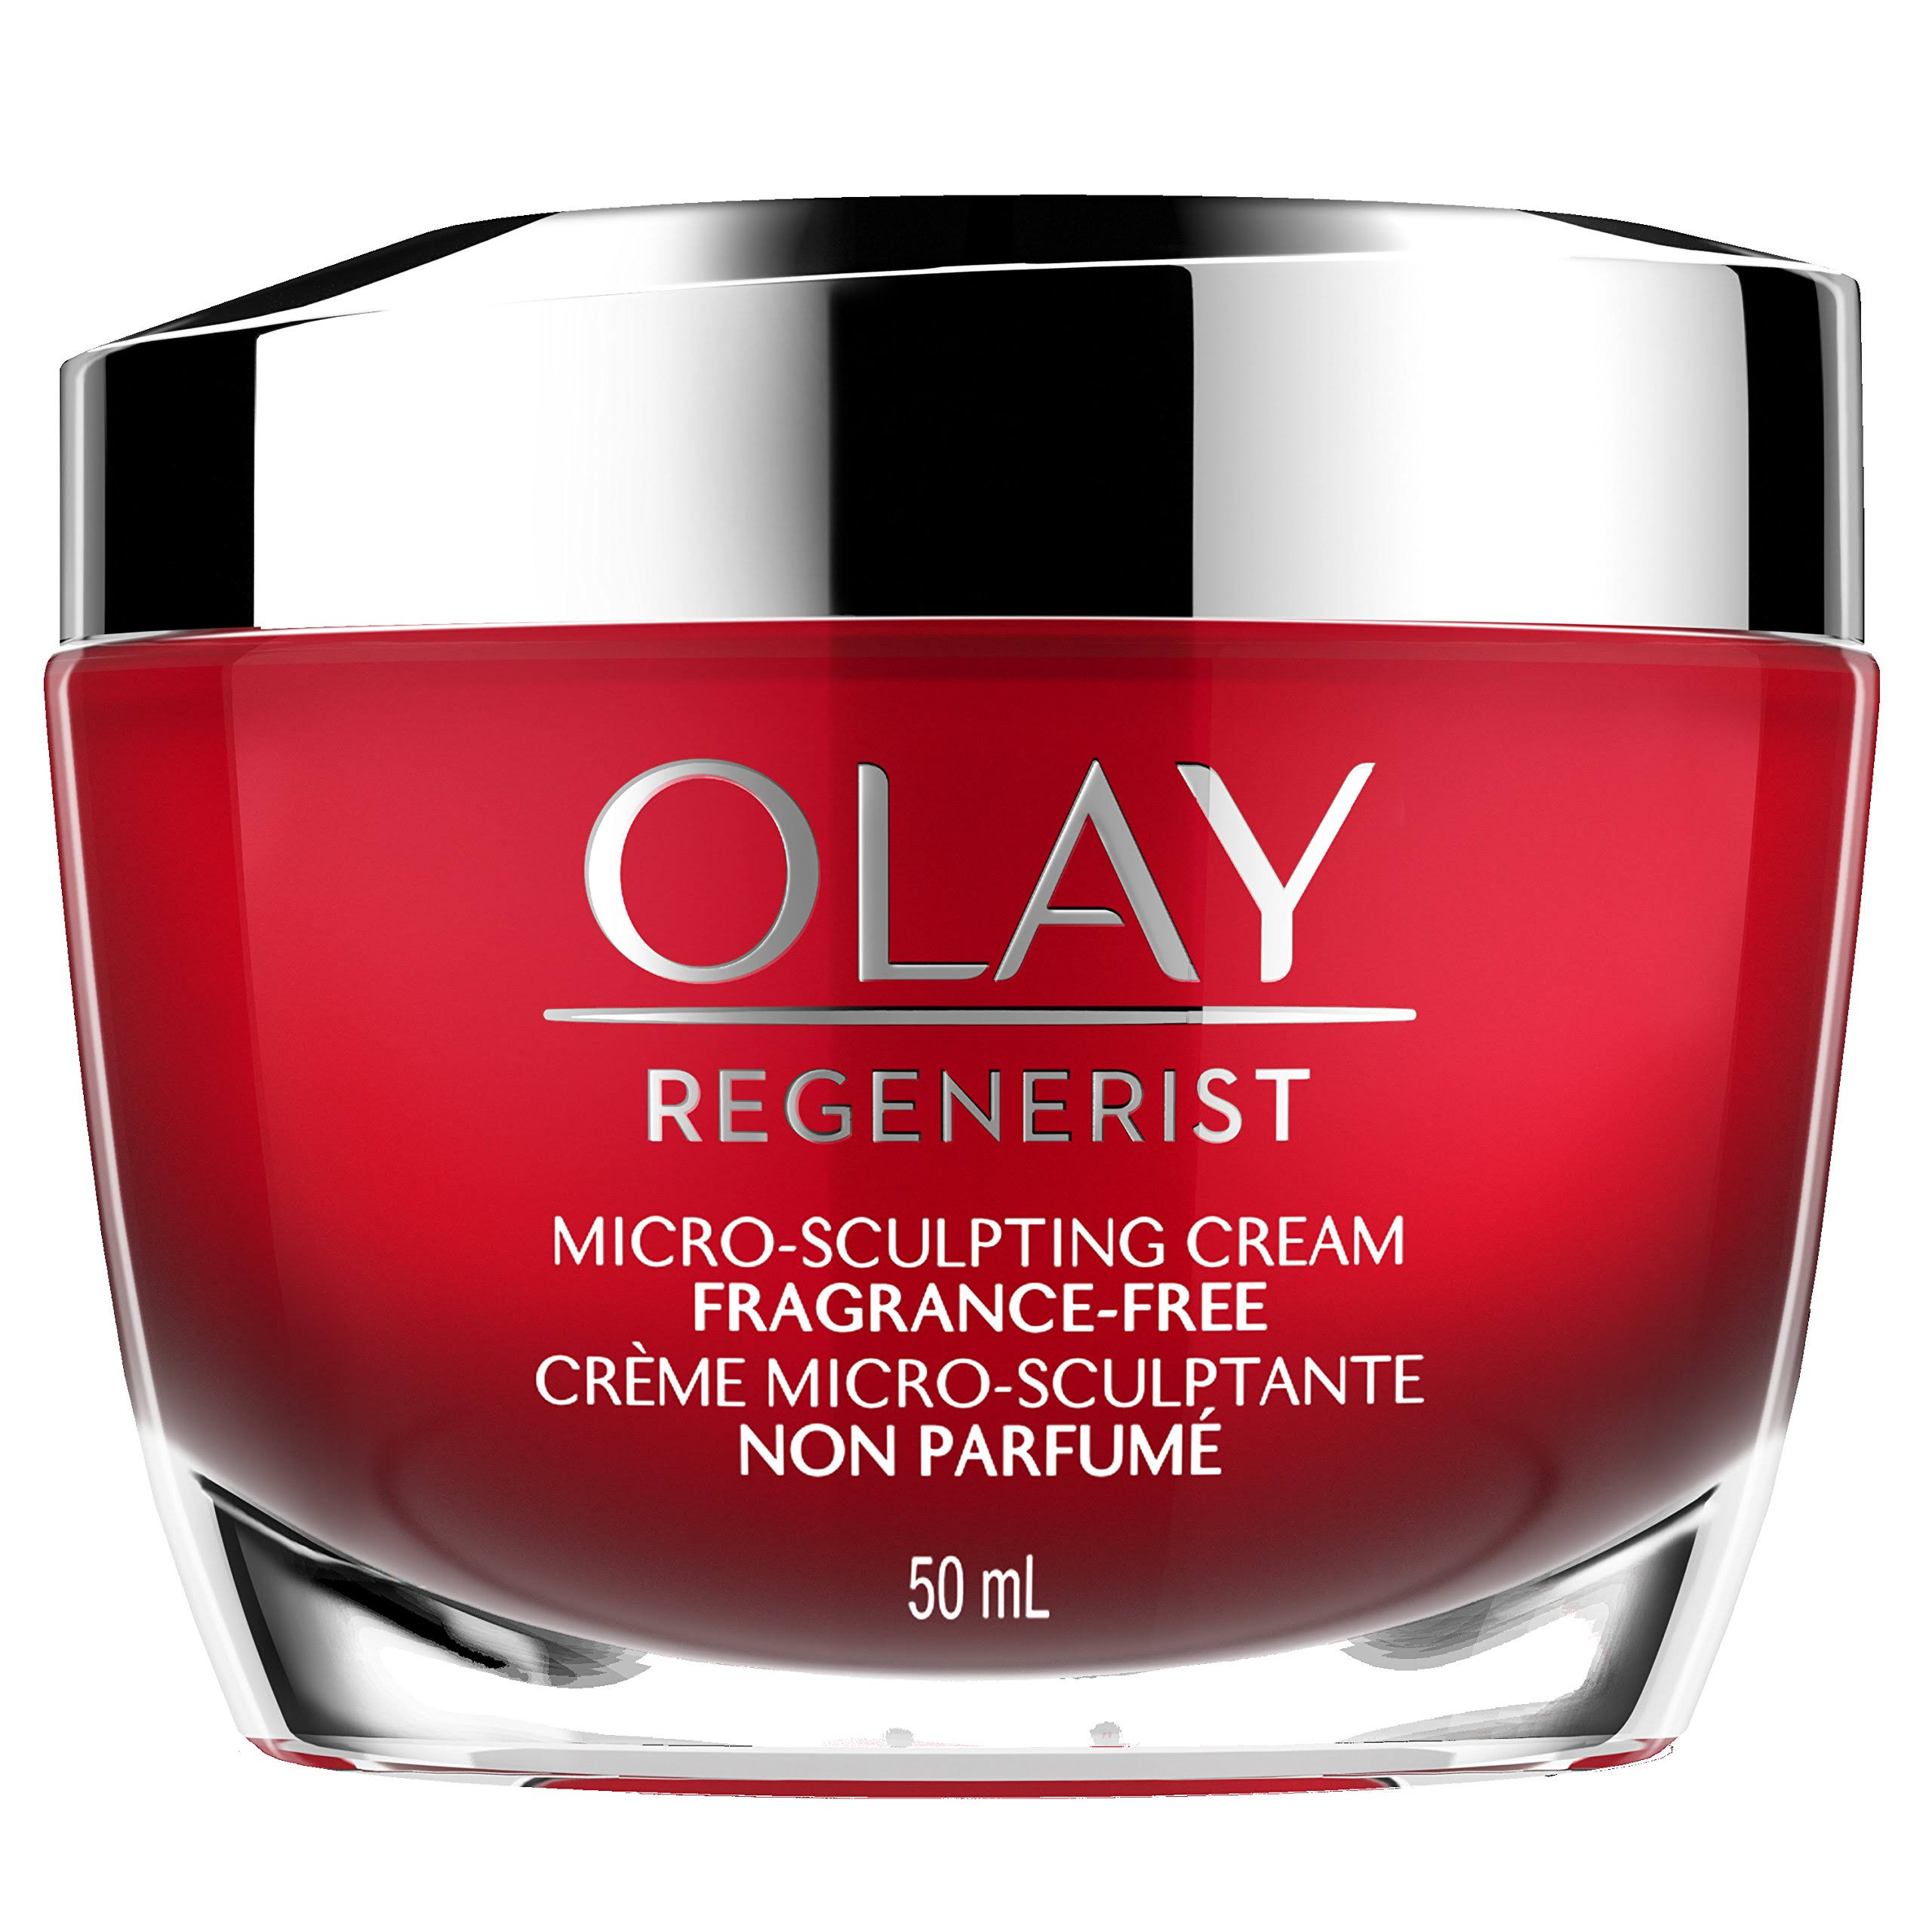 Olay Regenerist Advanced Anti-Aging Micro-Sculpting Cream - Fragrance Free, 50ml